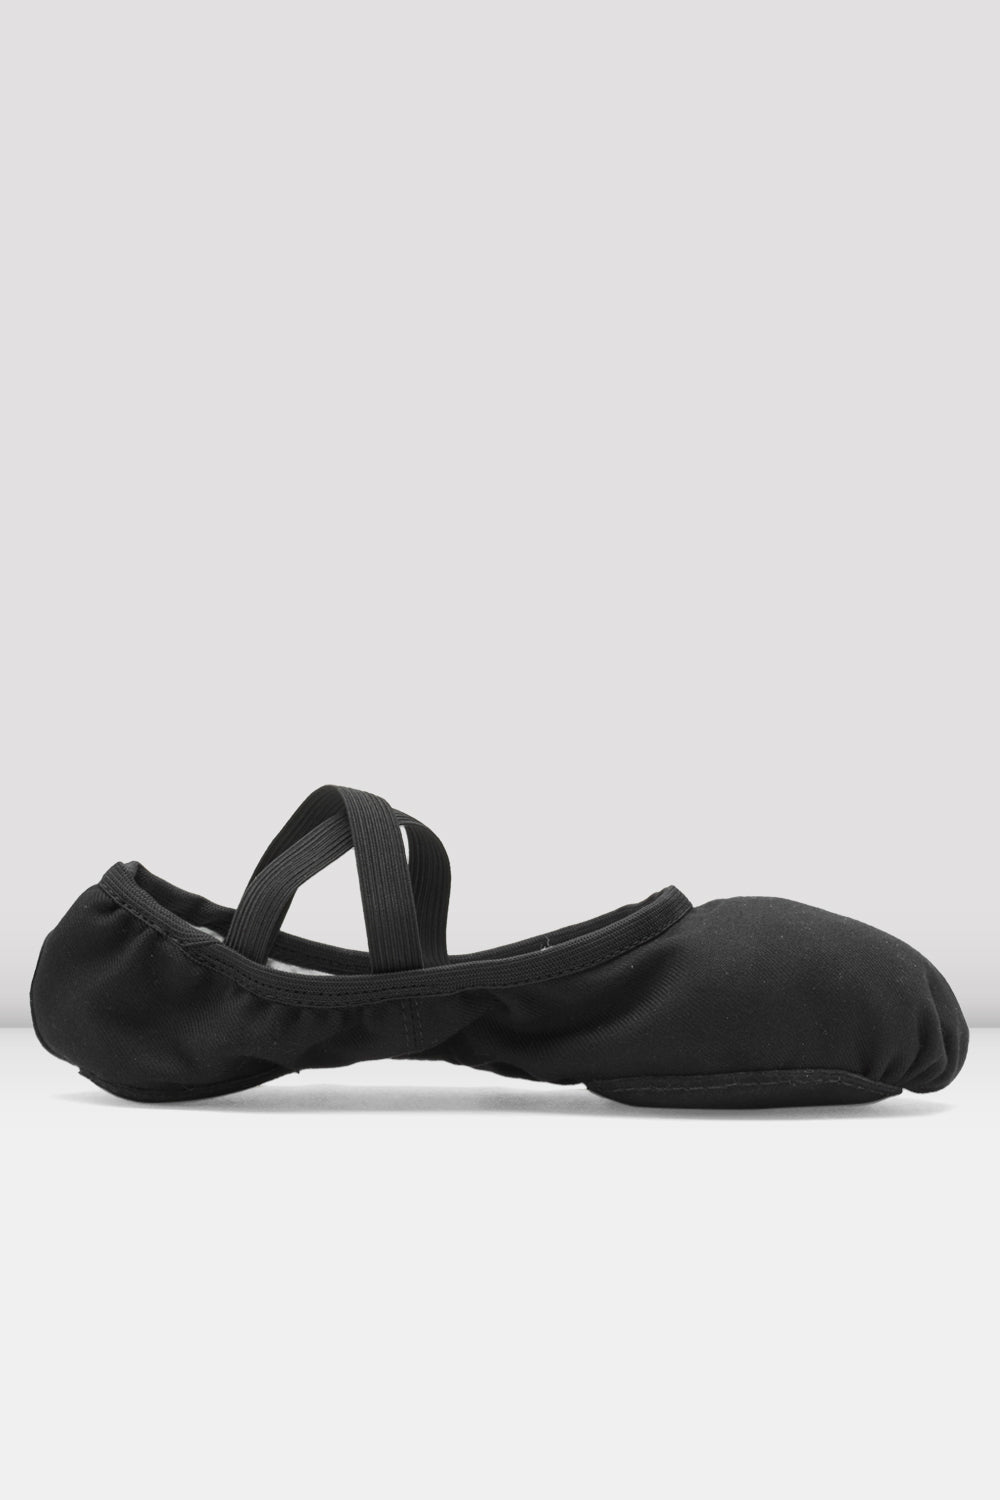 childrens black ballet shoes